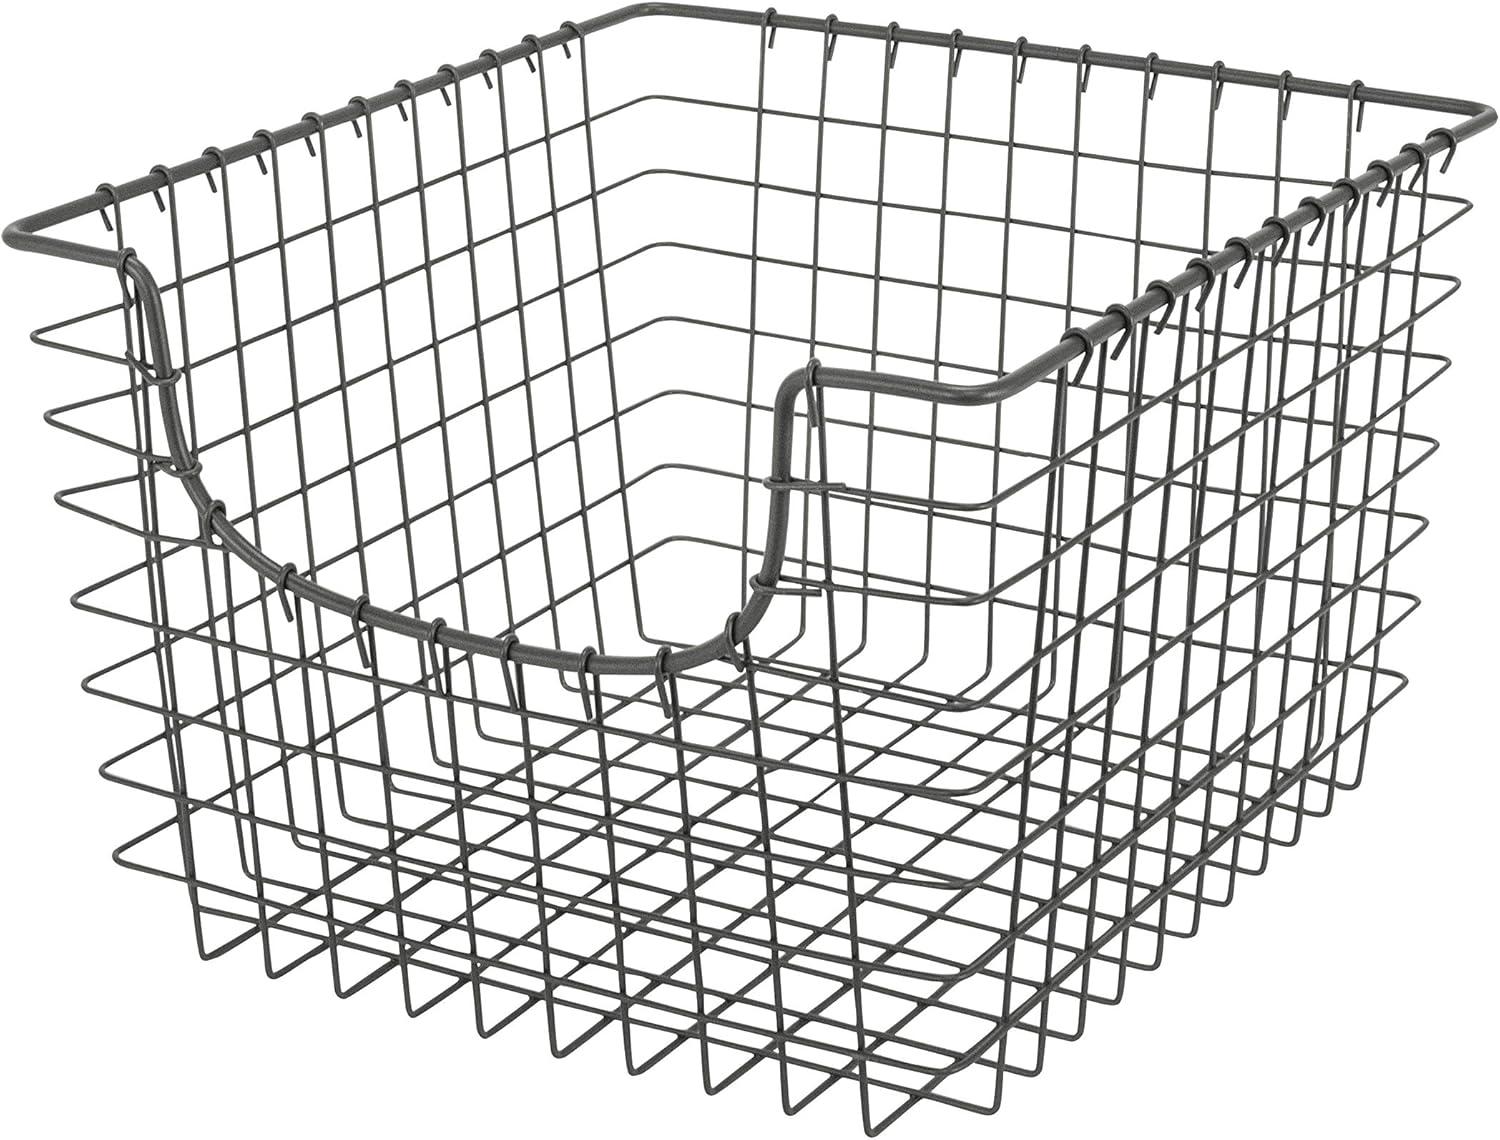 Rustic Chic Industrial Gray Rectangular Wire Storage Basket